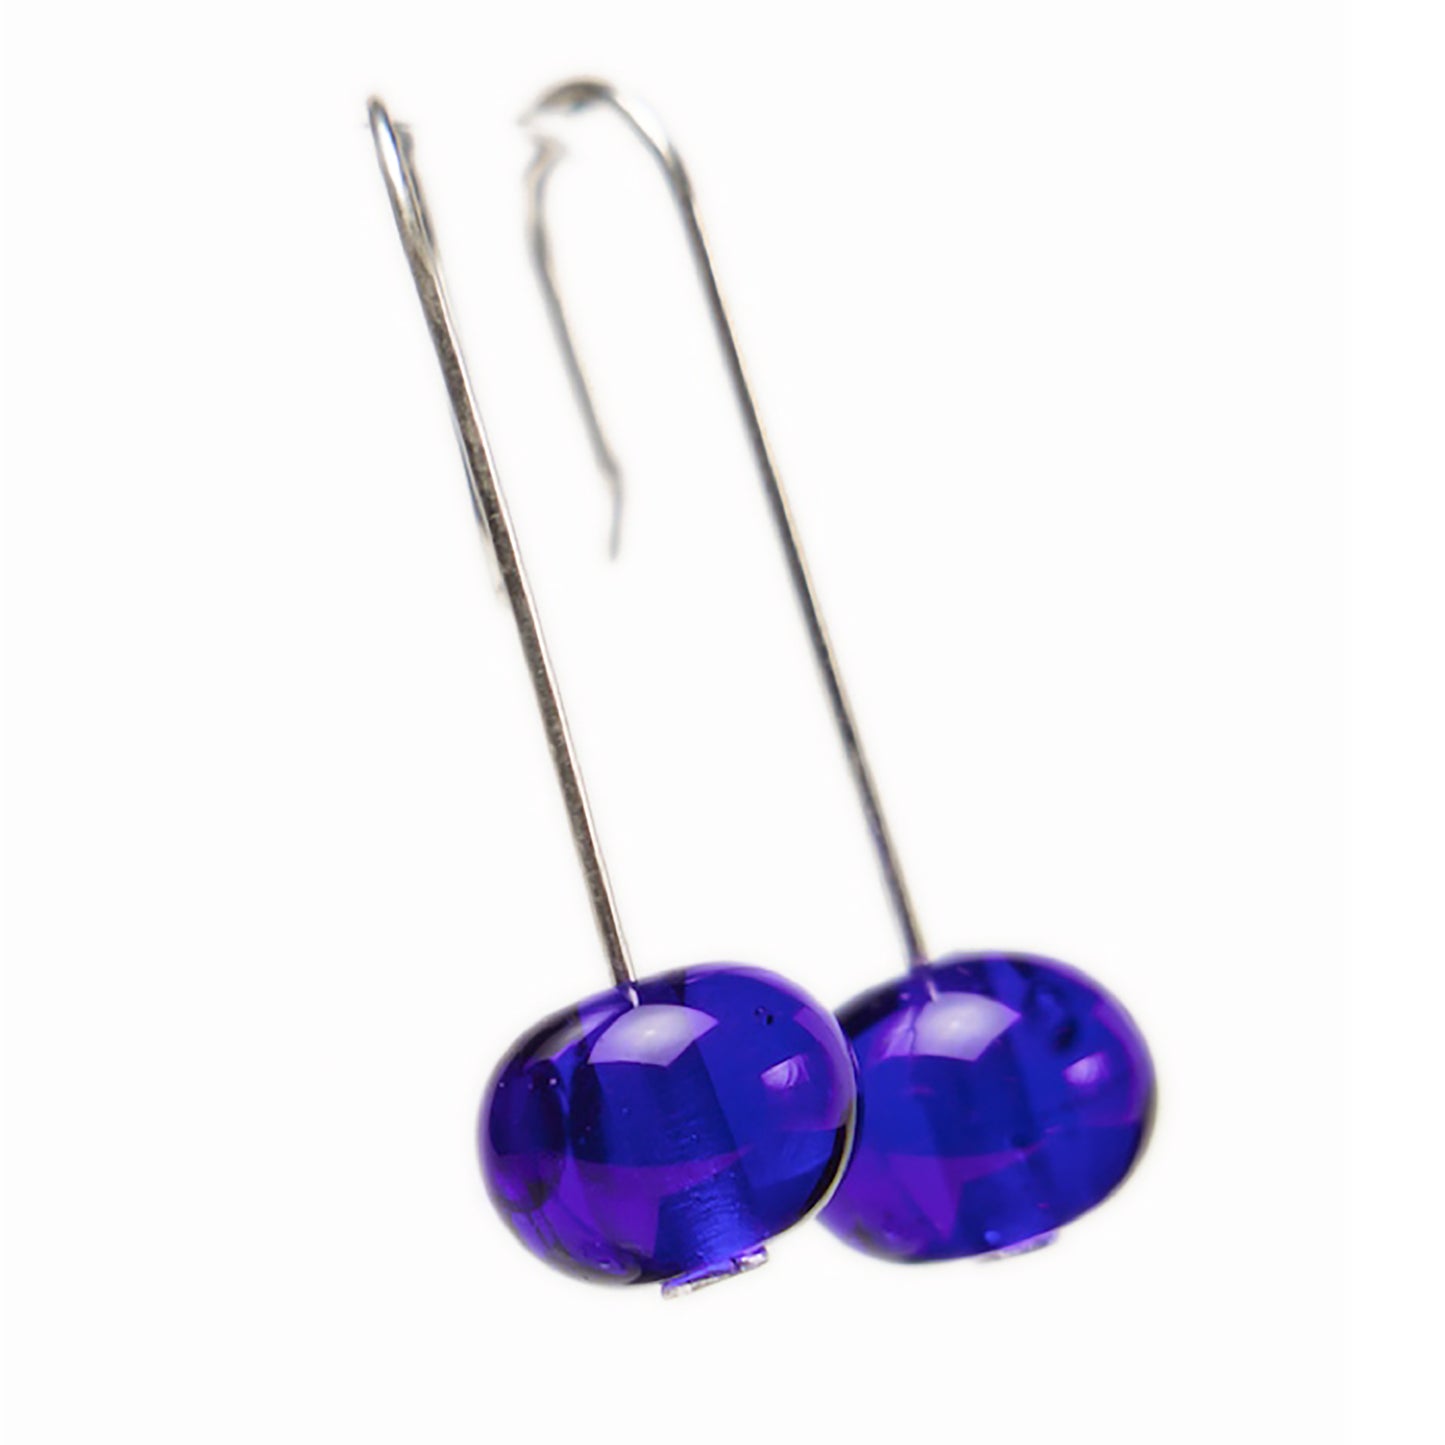 Bubble bead earrings - cobalt blue